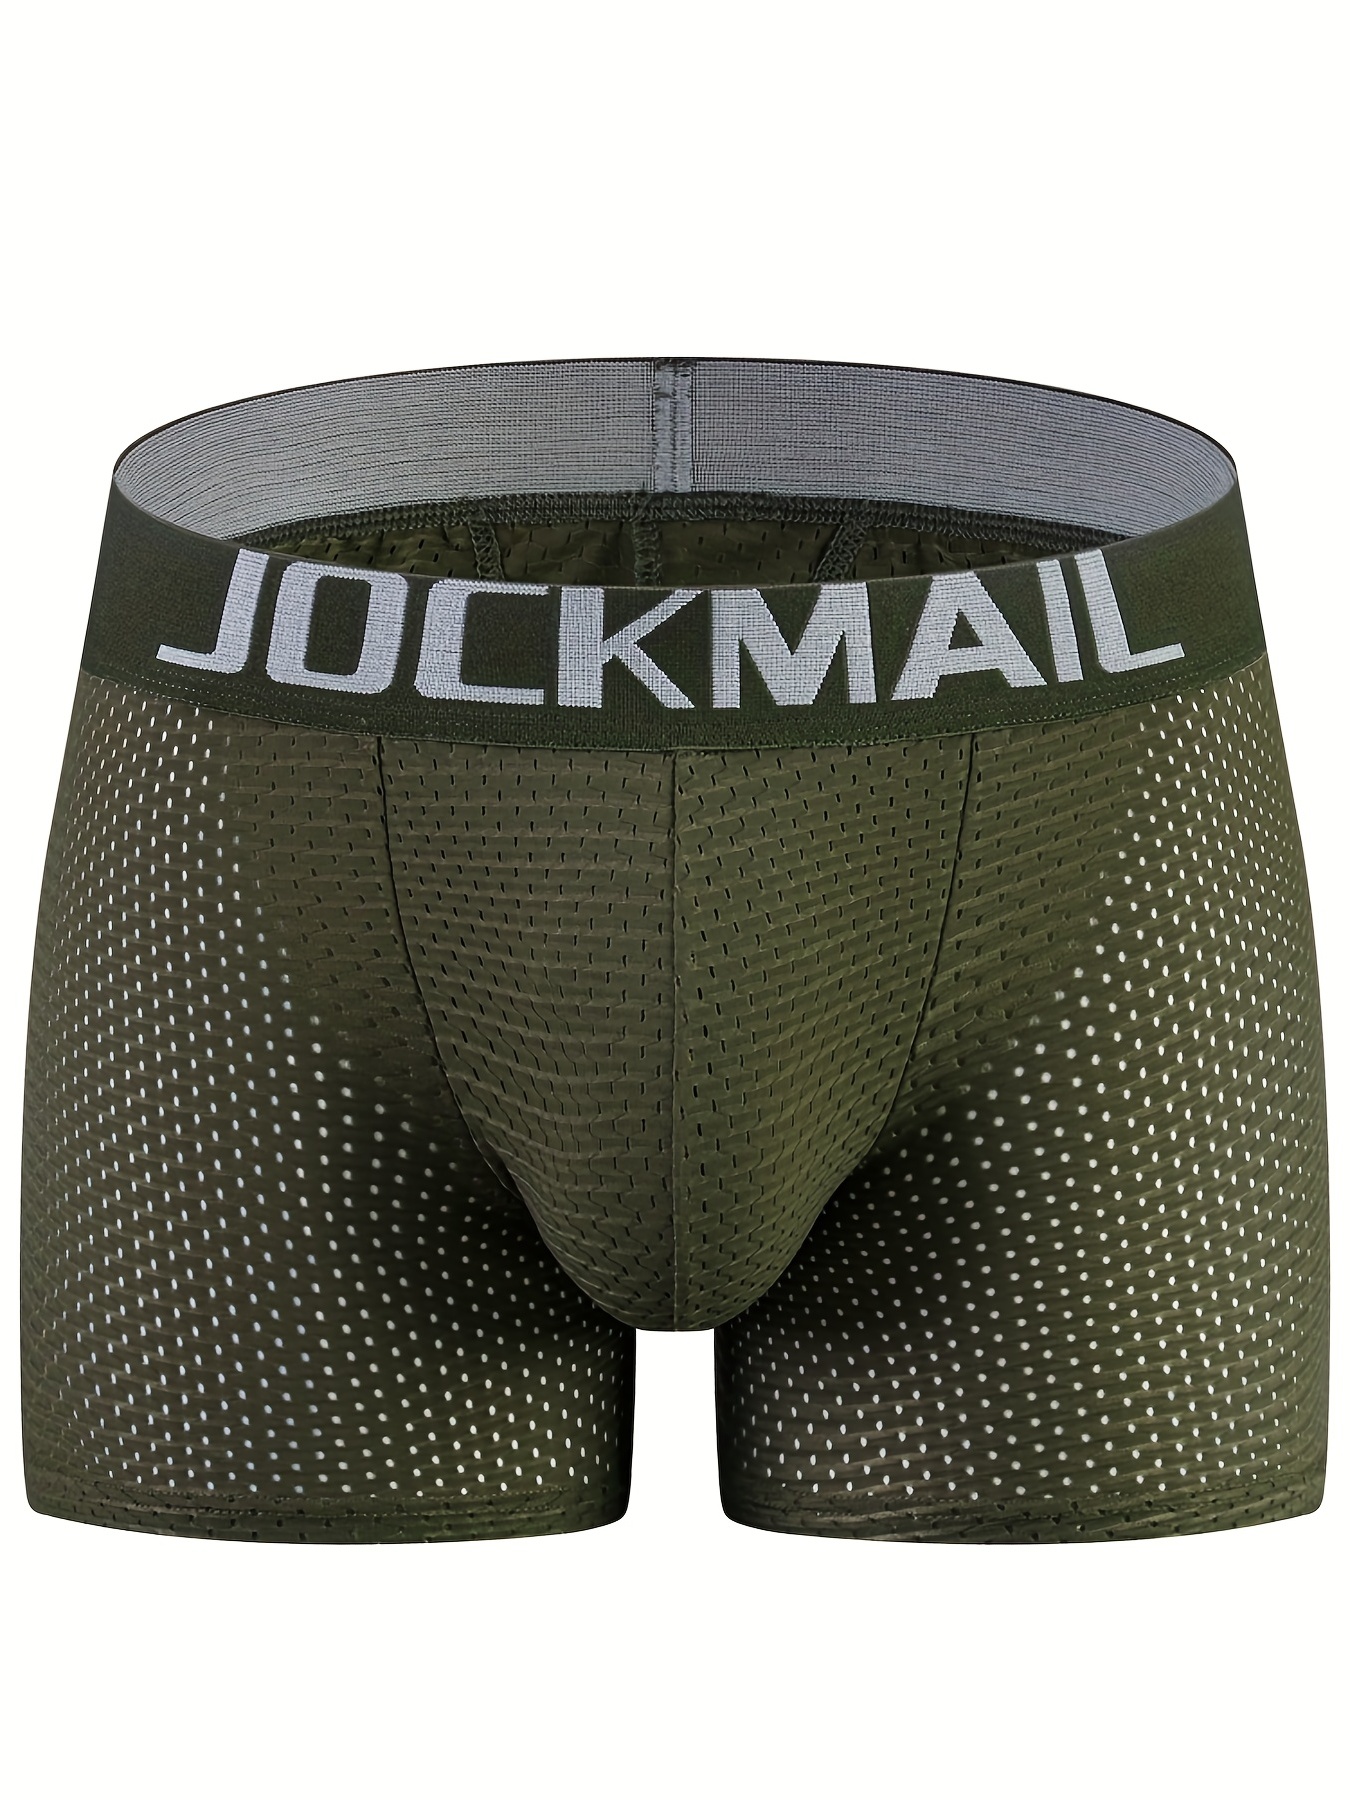 JOCKMAIL Men Mesh Underwear Boxers Trunks Shorts Breathable Crotch